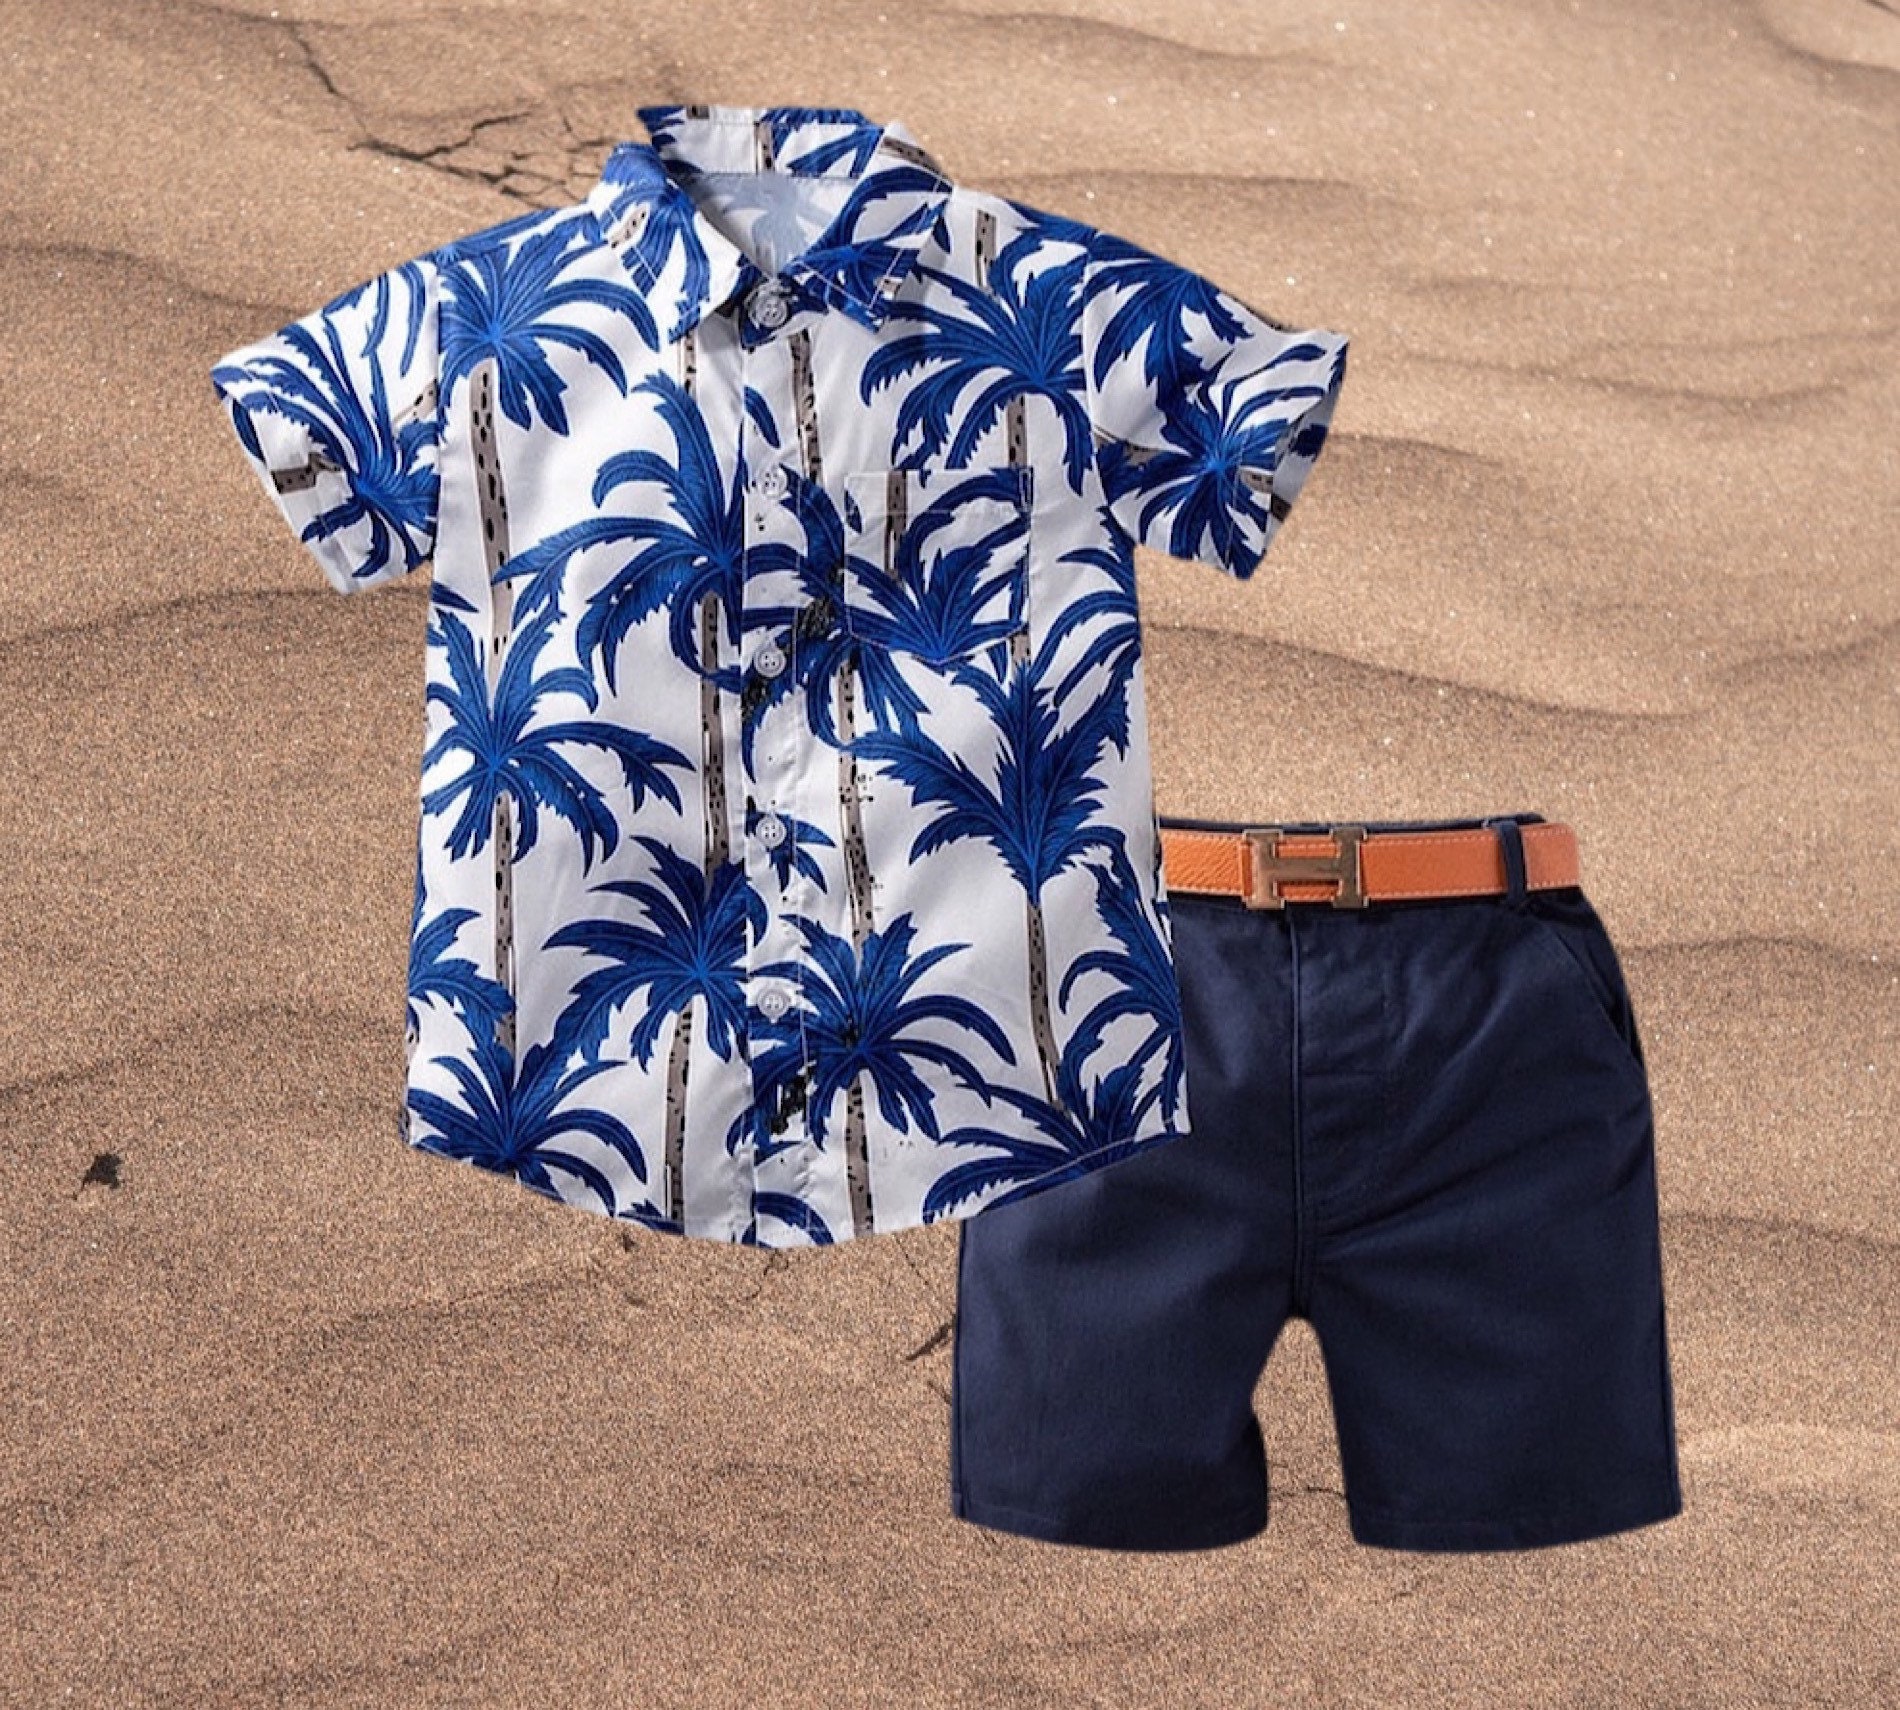 Bermuda Shorts 2 Pieces Summer Aloha Outfits 6M-5Y Toddler Baby Boy Hawaiian Shorts Set Button Down Floral Shirt Top 